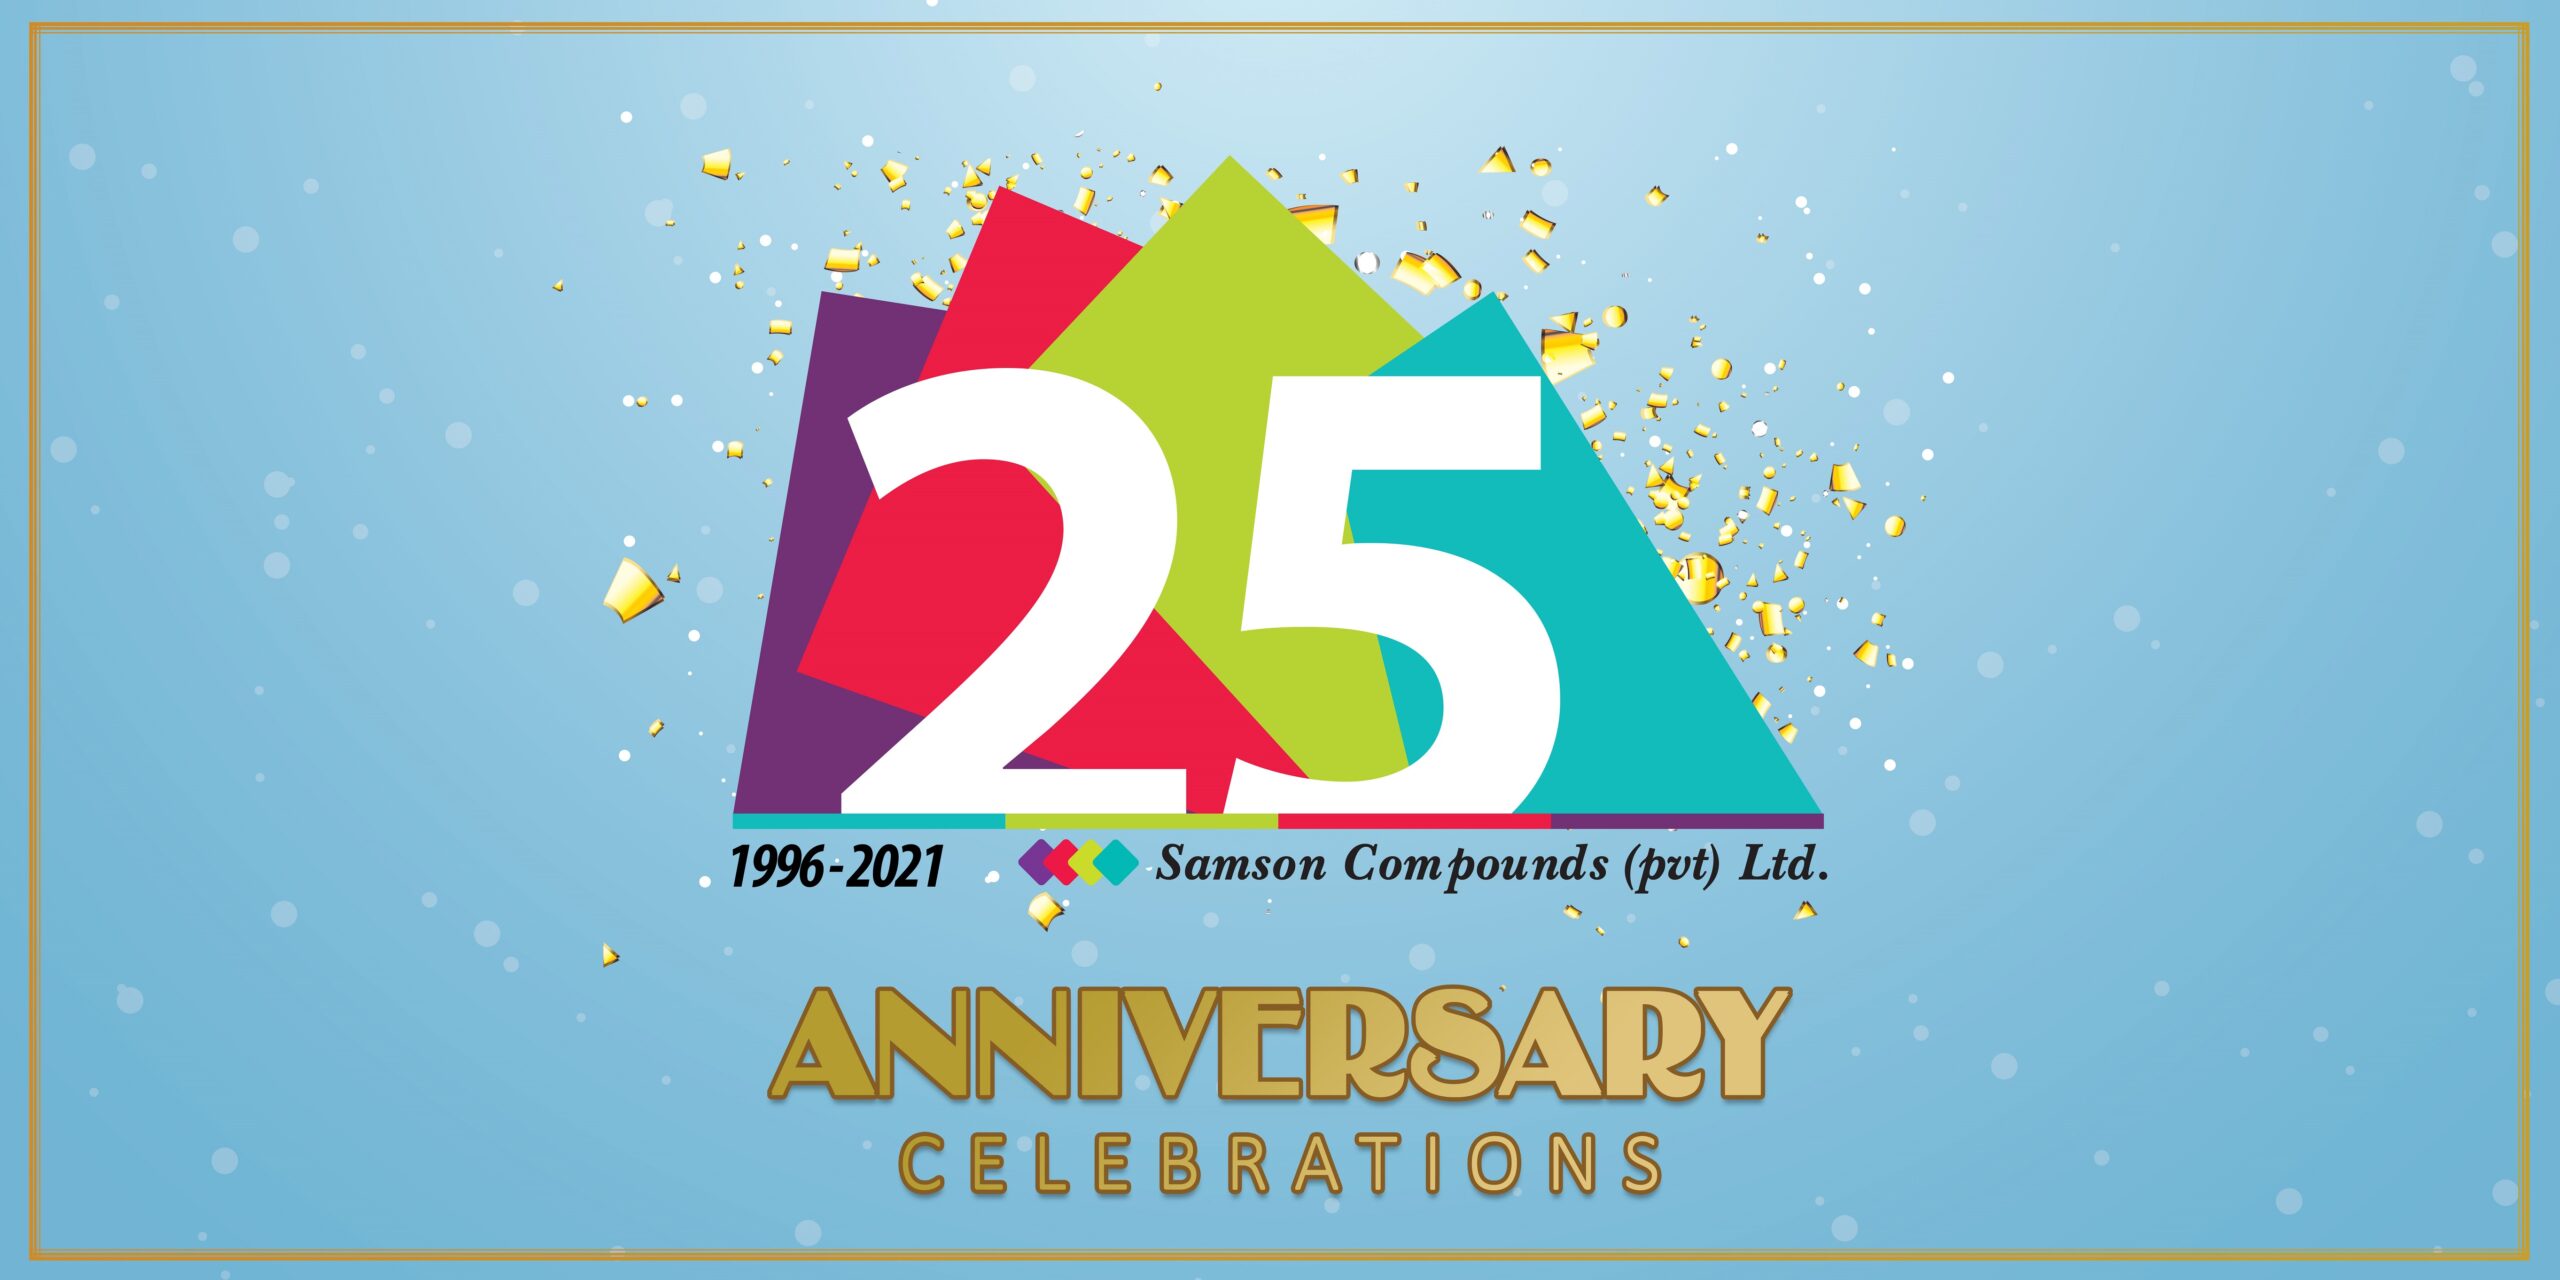 Samson Compounds (Pvt) Ltd celebrated its 25th anniversary